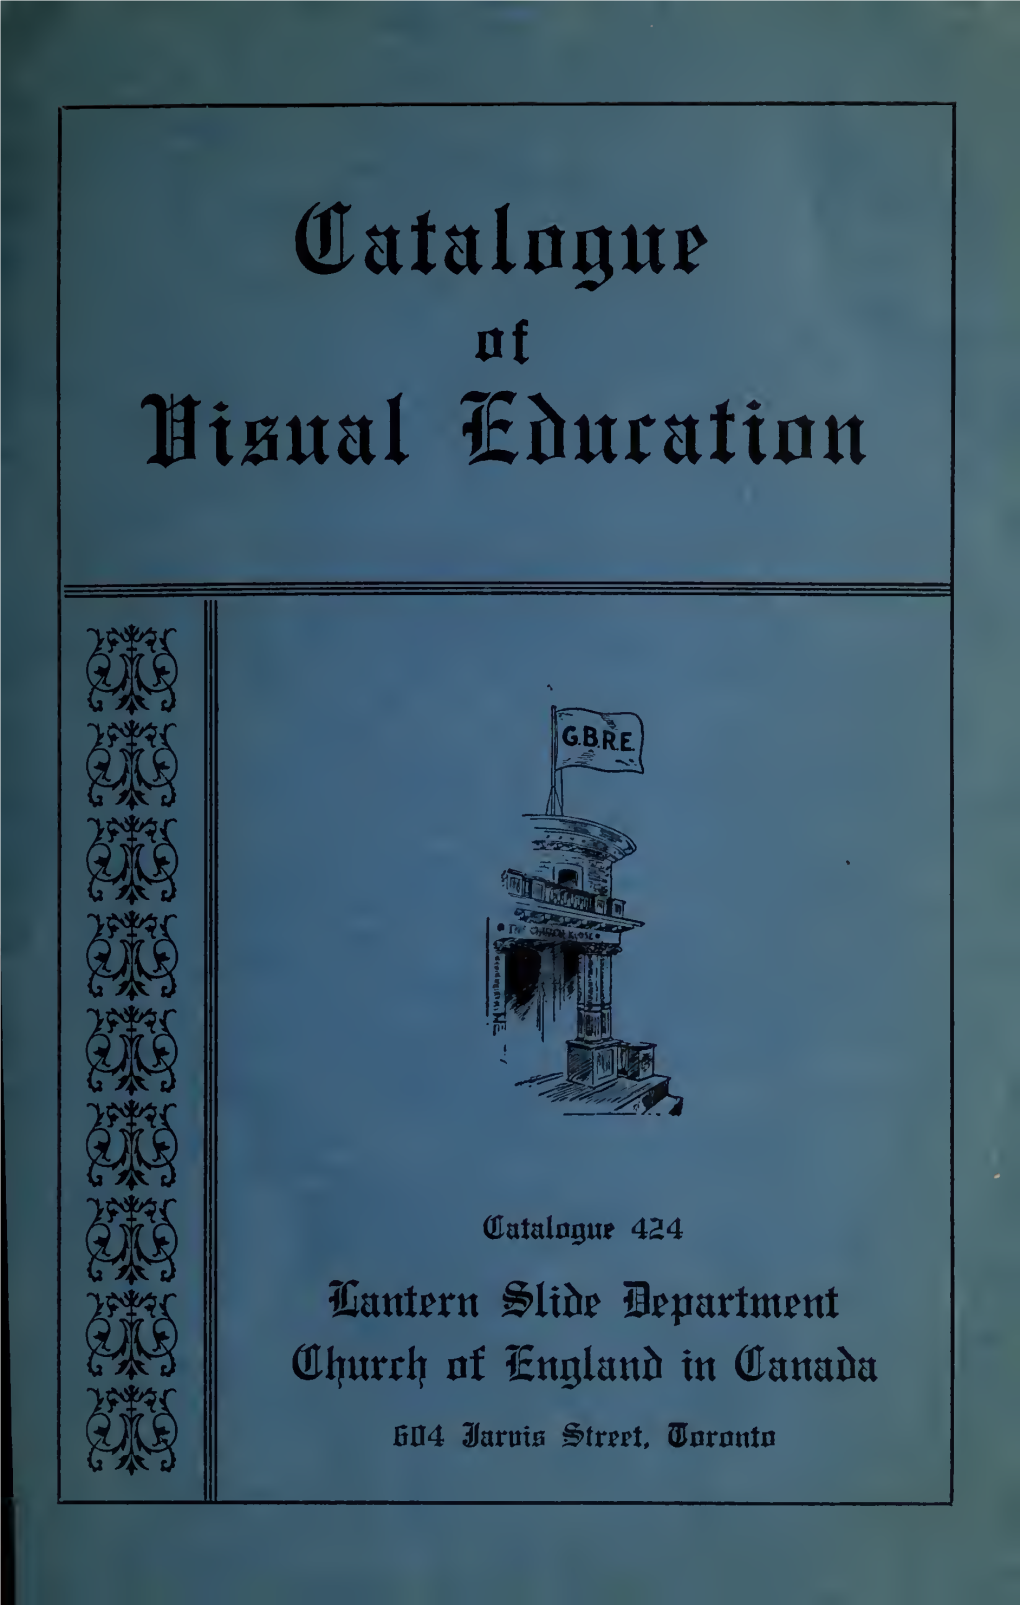 Catalogue of Visual Education